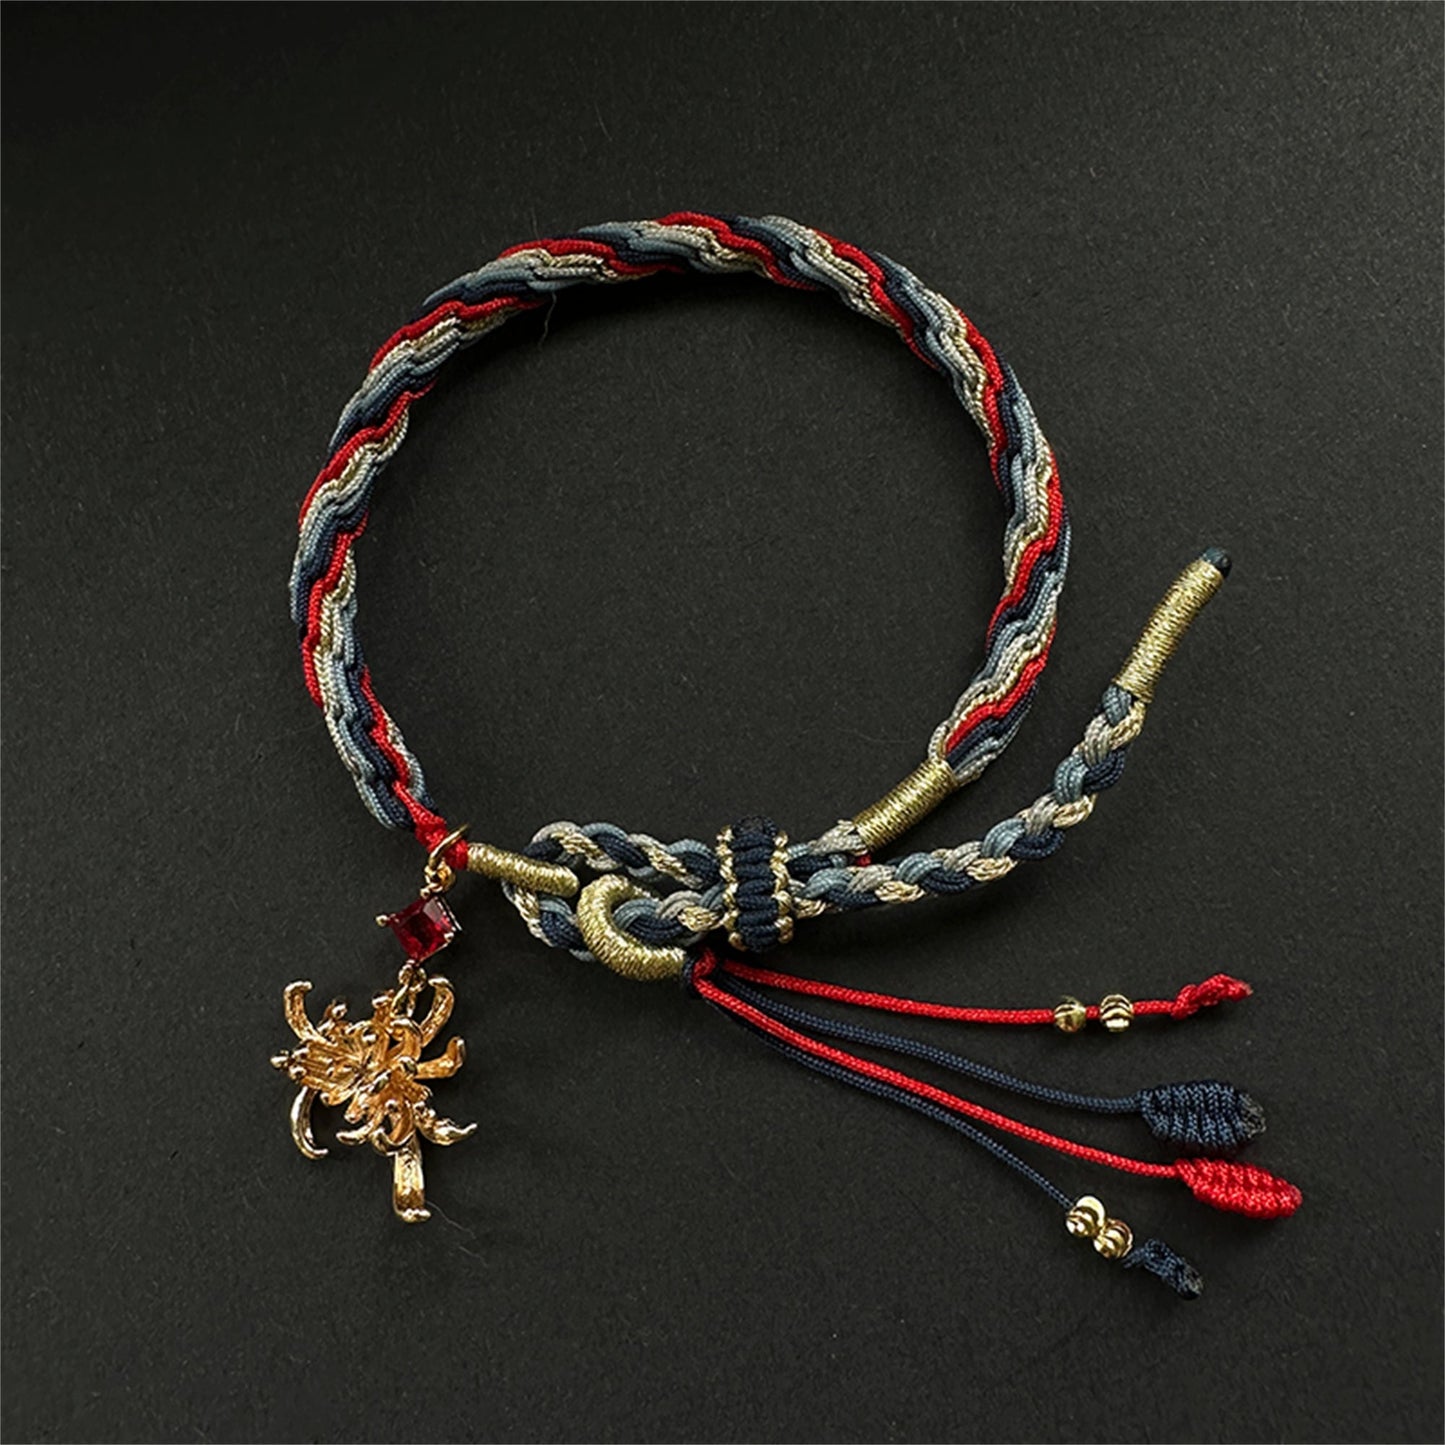 Honkai Star Rail Qingque Bracelet Hand-Woven Bracelet